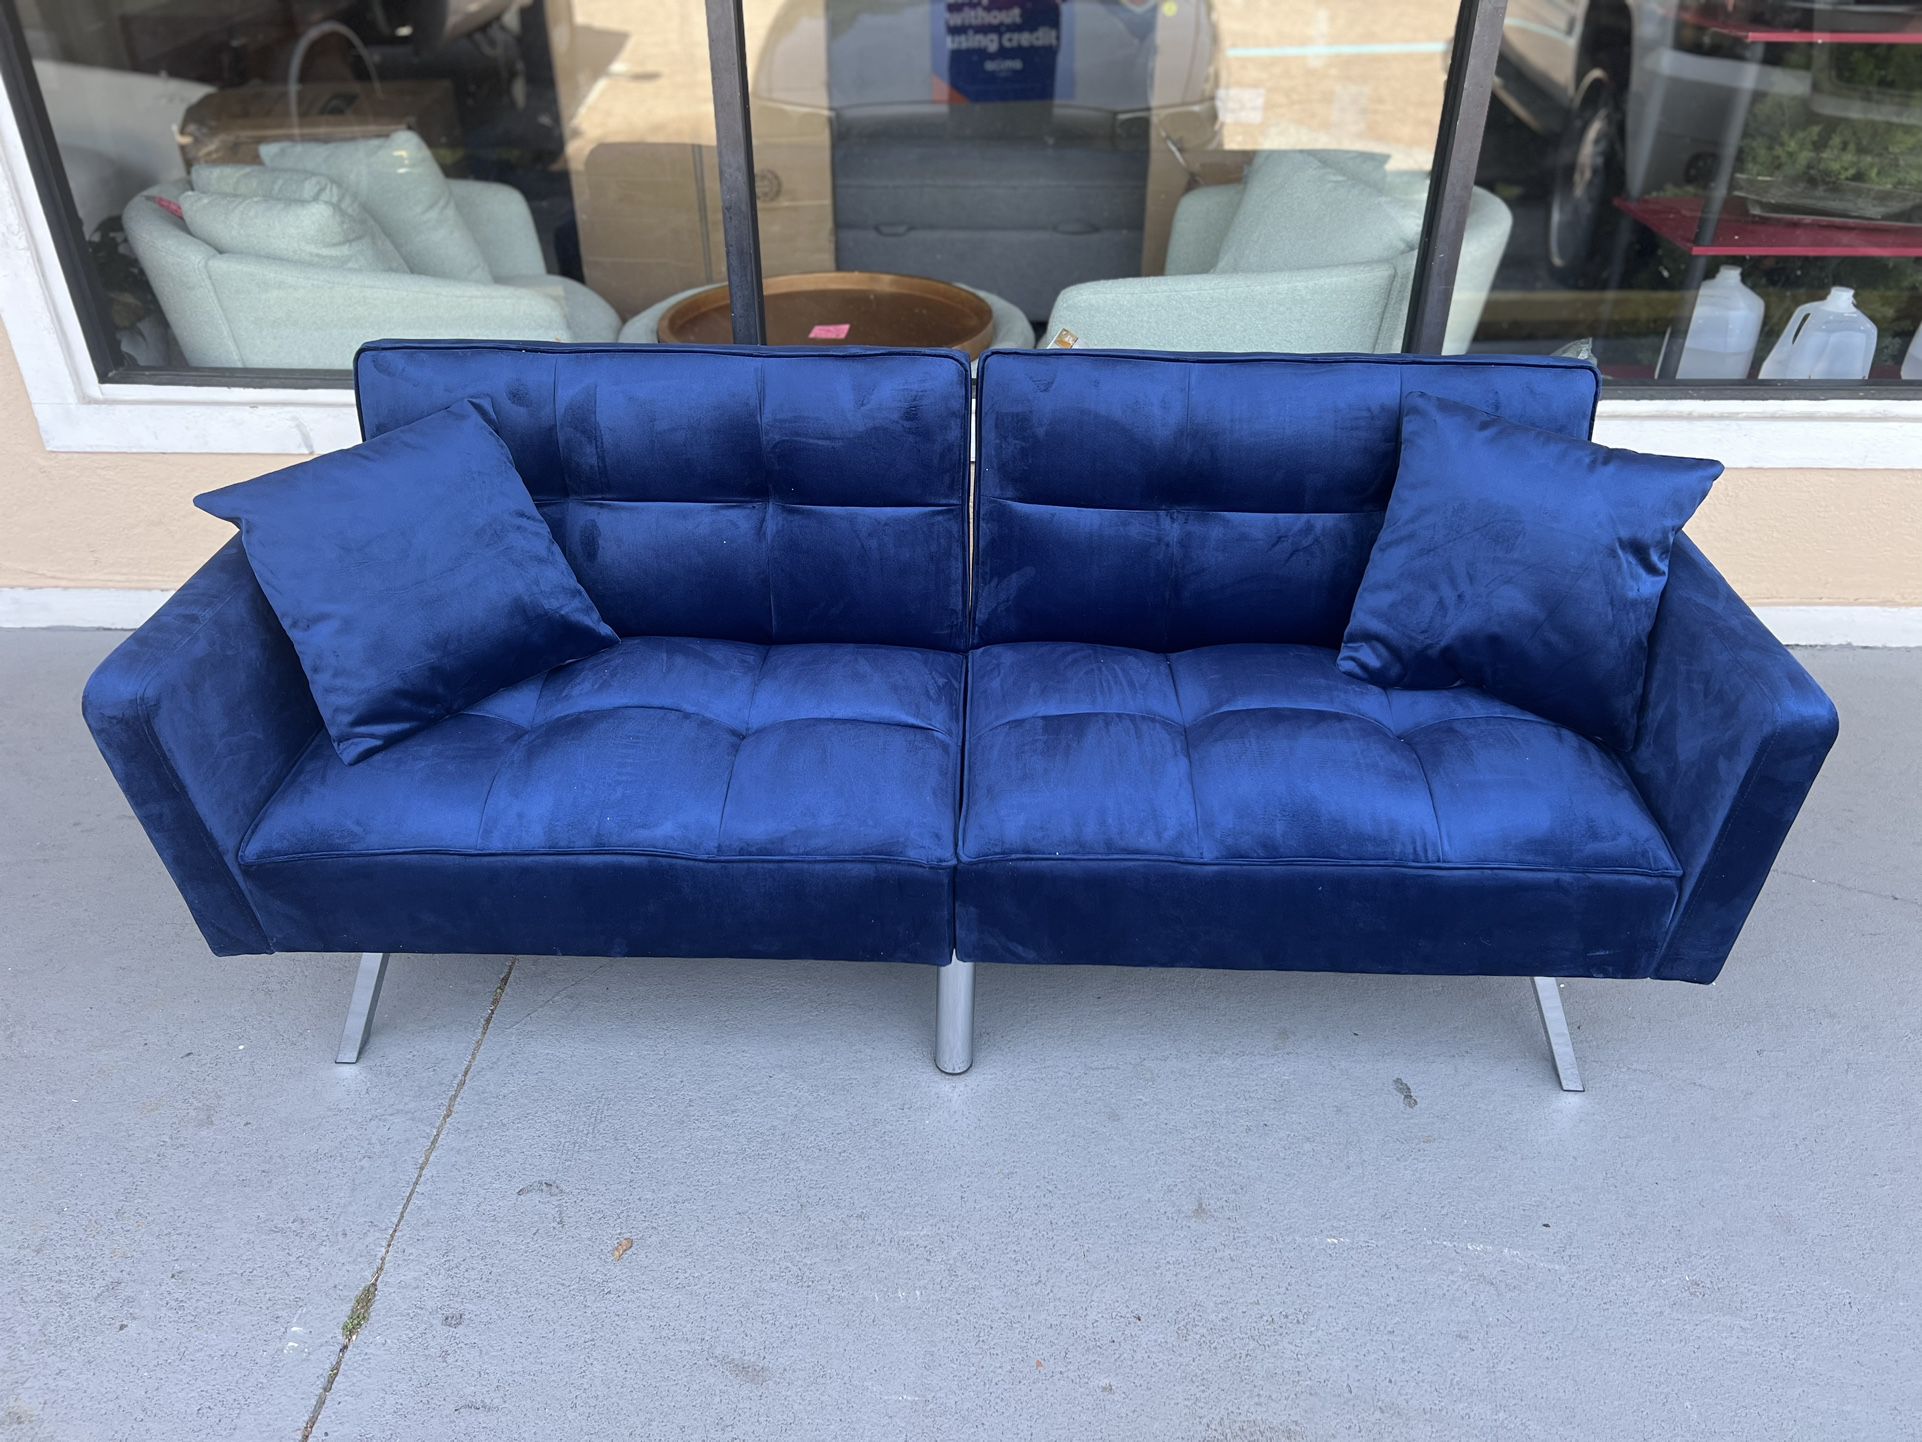 New 74 Inch Wide Modern Tufted Futon Sofa Bed, Velvet Upholstered Convertible Sofa, Blue